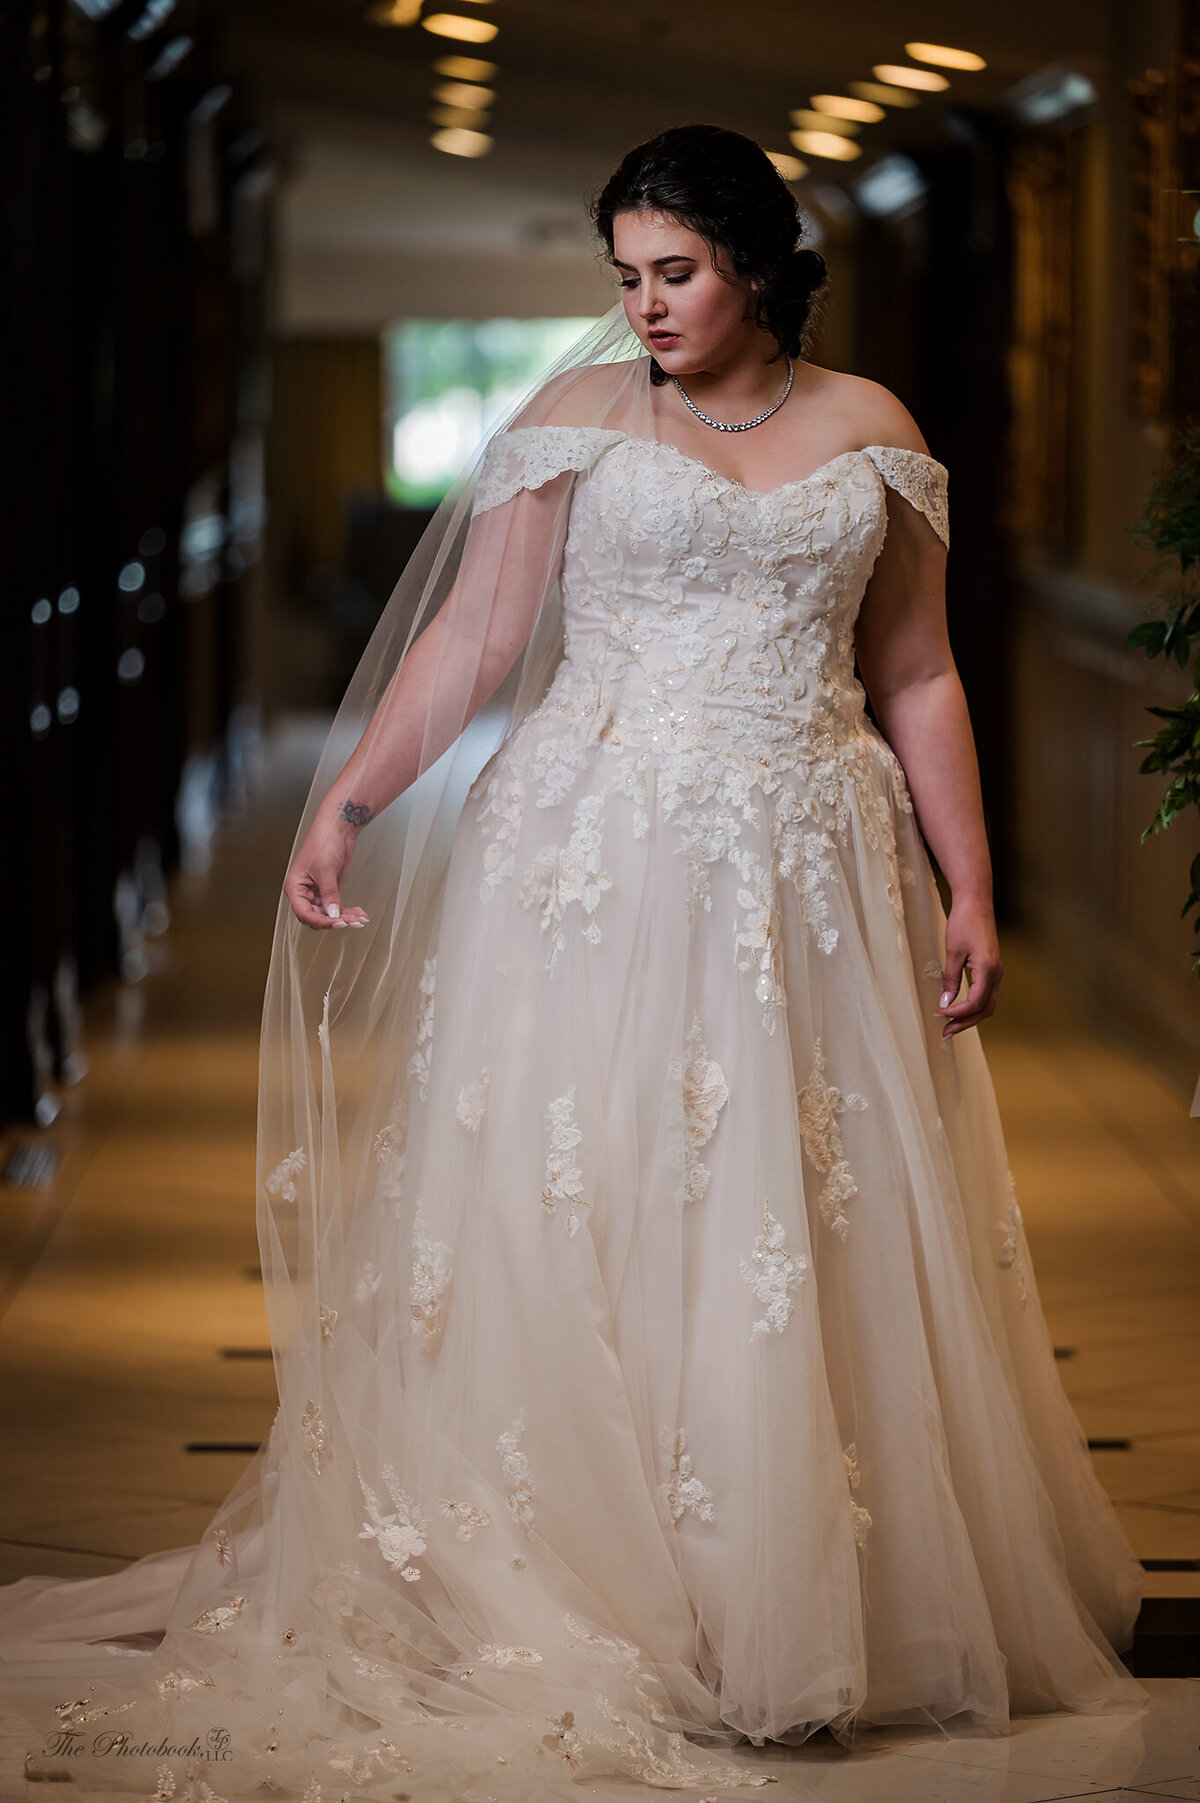 TP6_4547-Wedding Details, Ring, Wedding Photographer, Wedding Dress, Bride, Michigan Photographer, The Kensington Hotel